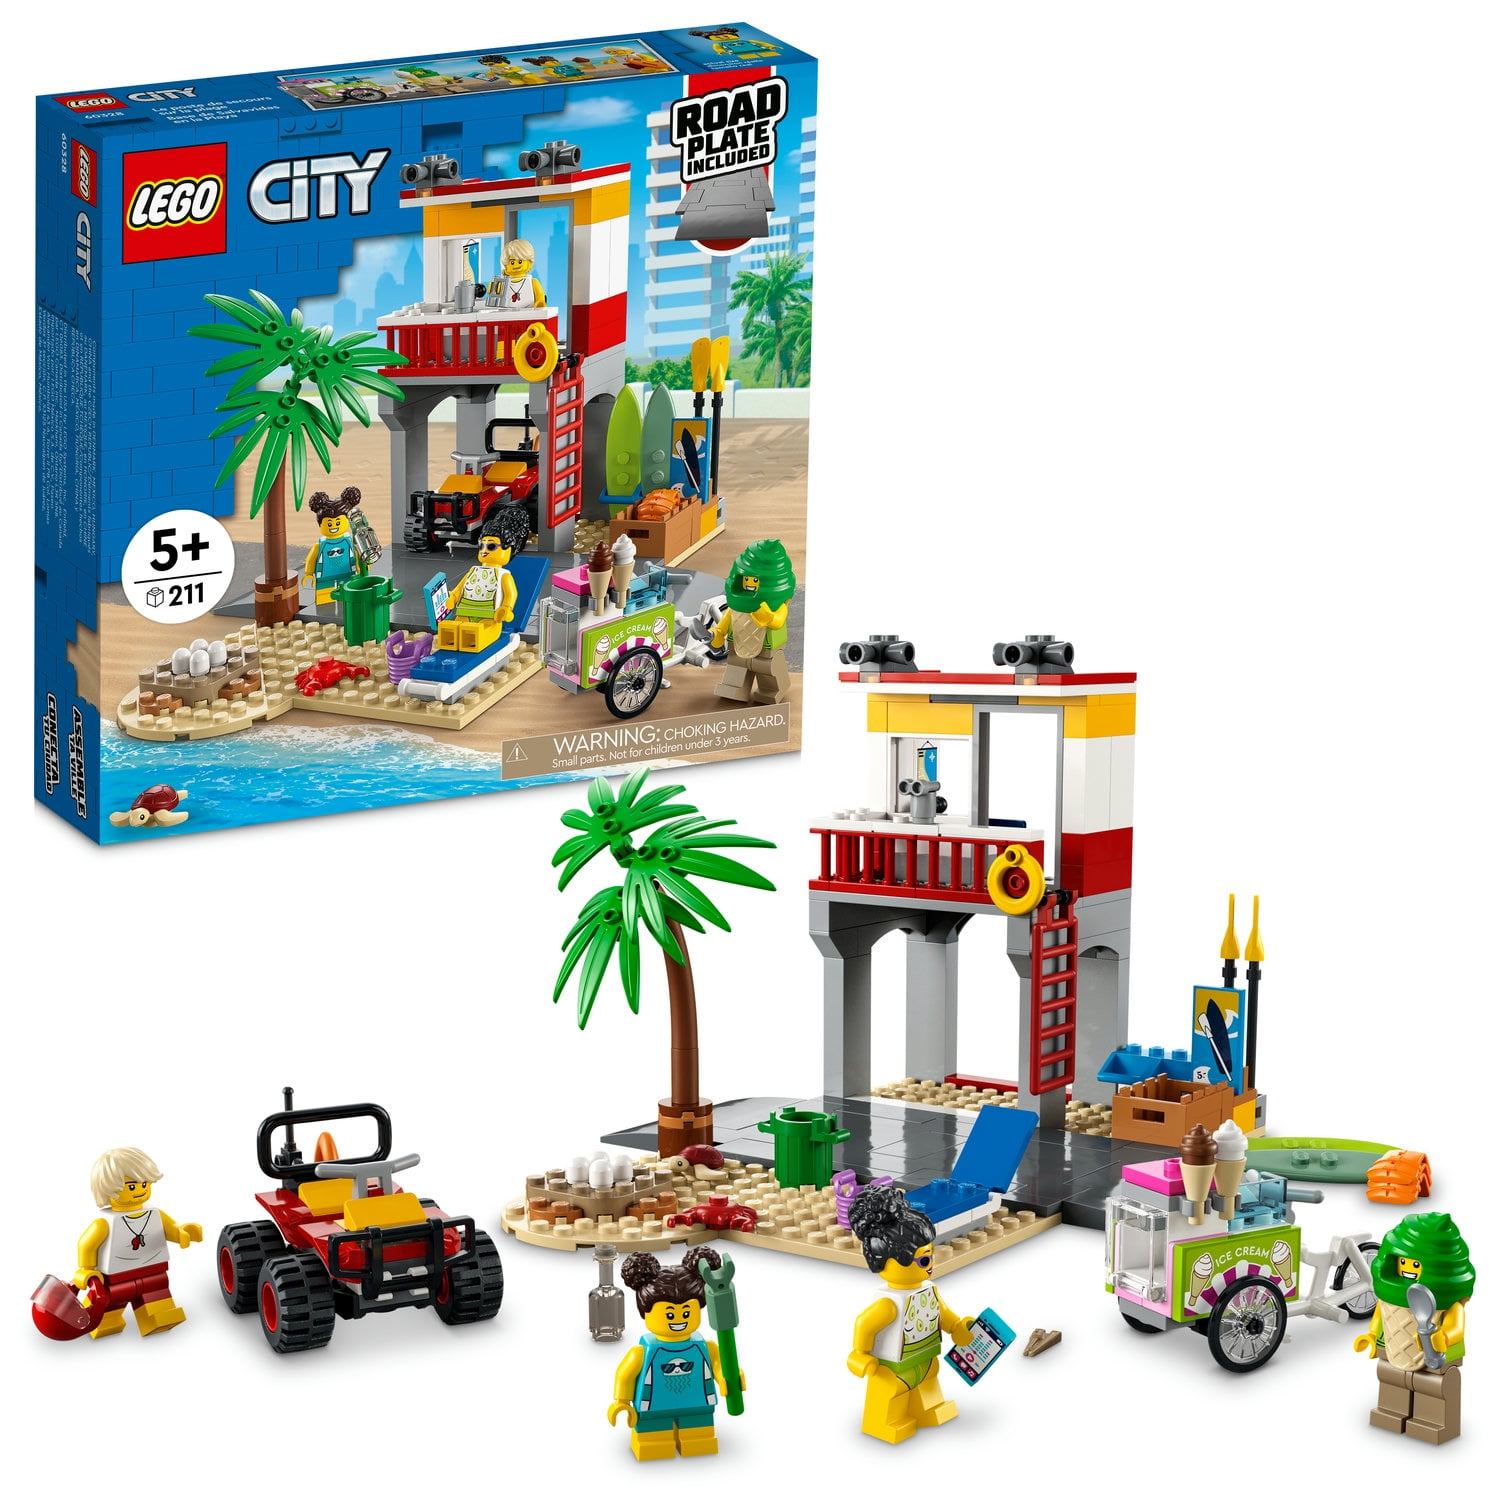 KITCHEN JUICE BAR MINIFIGURE UNIT NEW LEGO CITY FOOD BLENDER BUILDS 